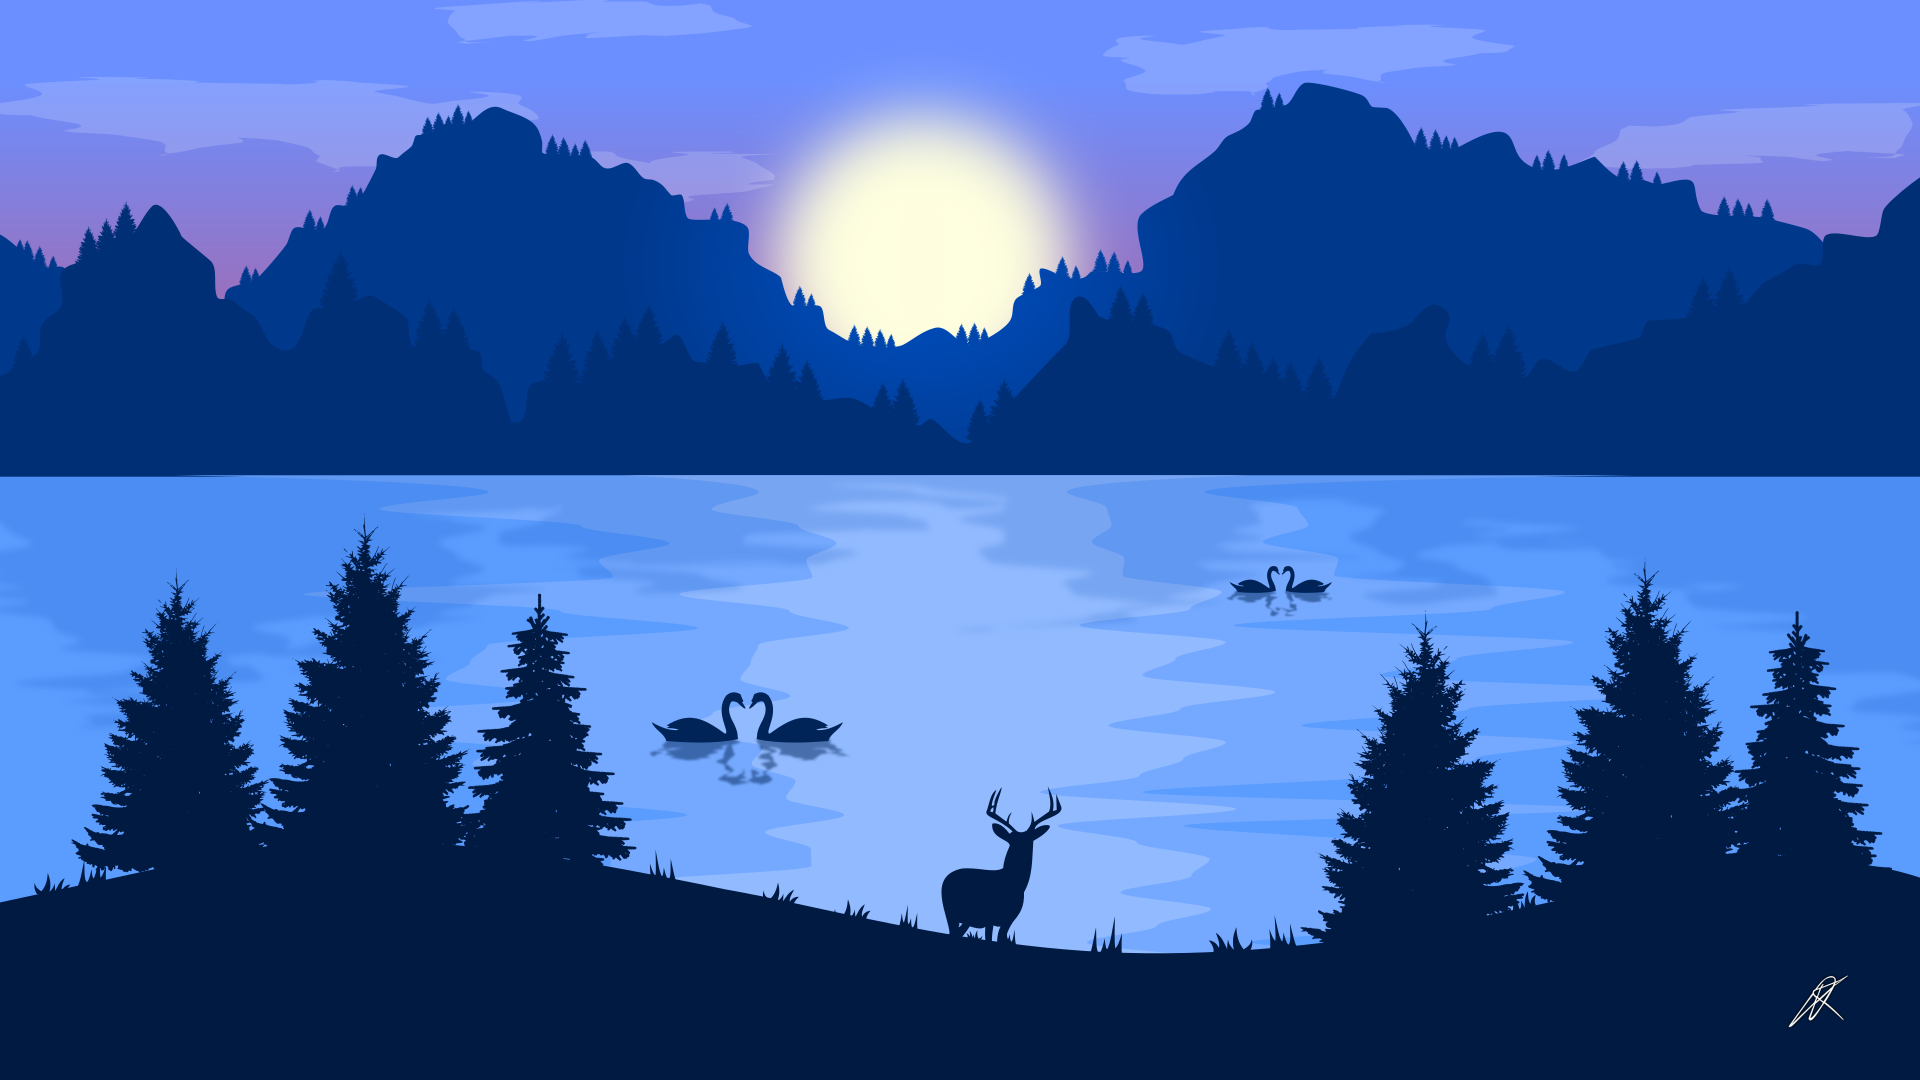 General 1920x1080 deer swans landscape mountains forest sunrise water animals digital art signature